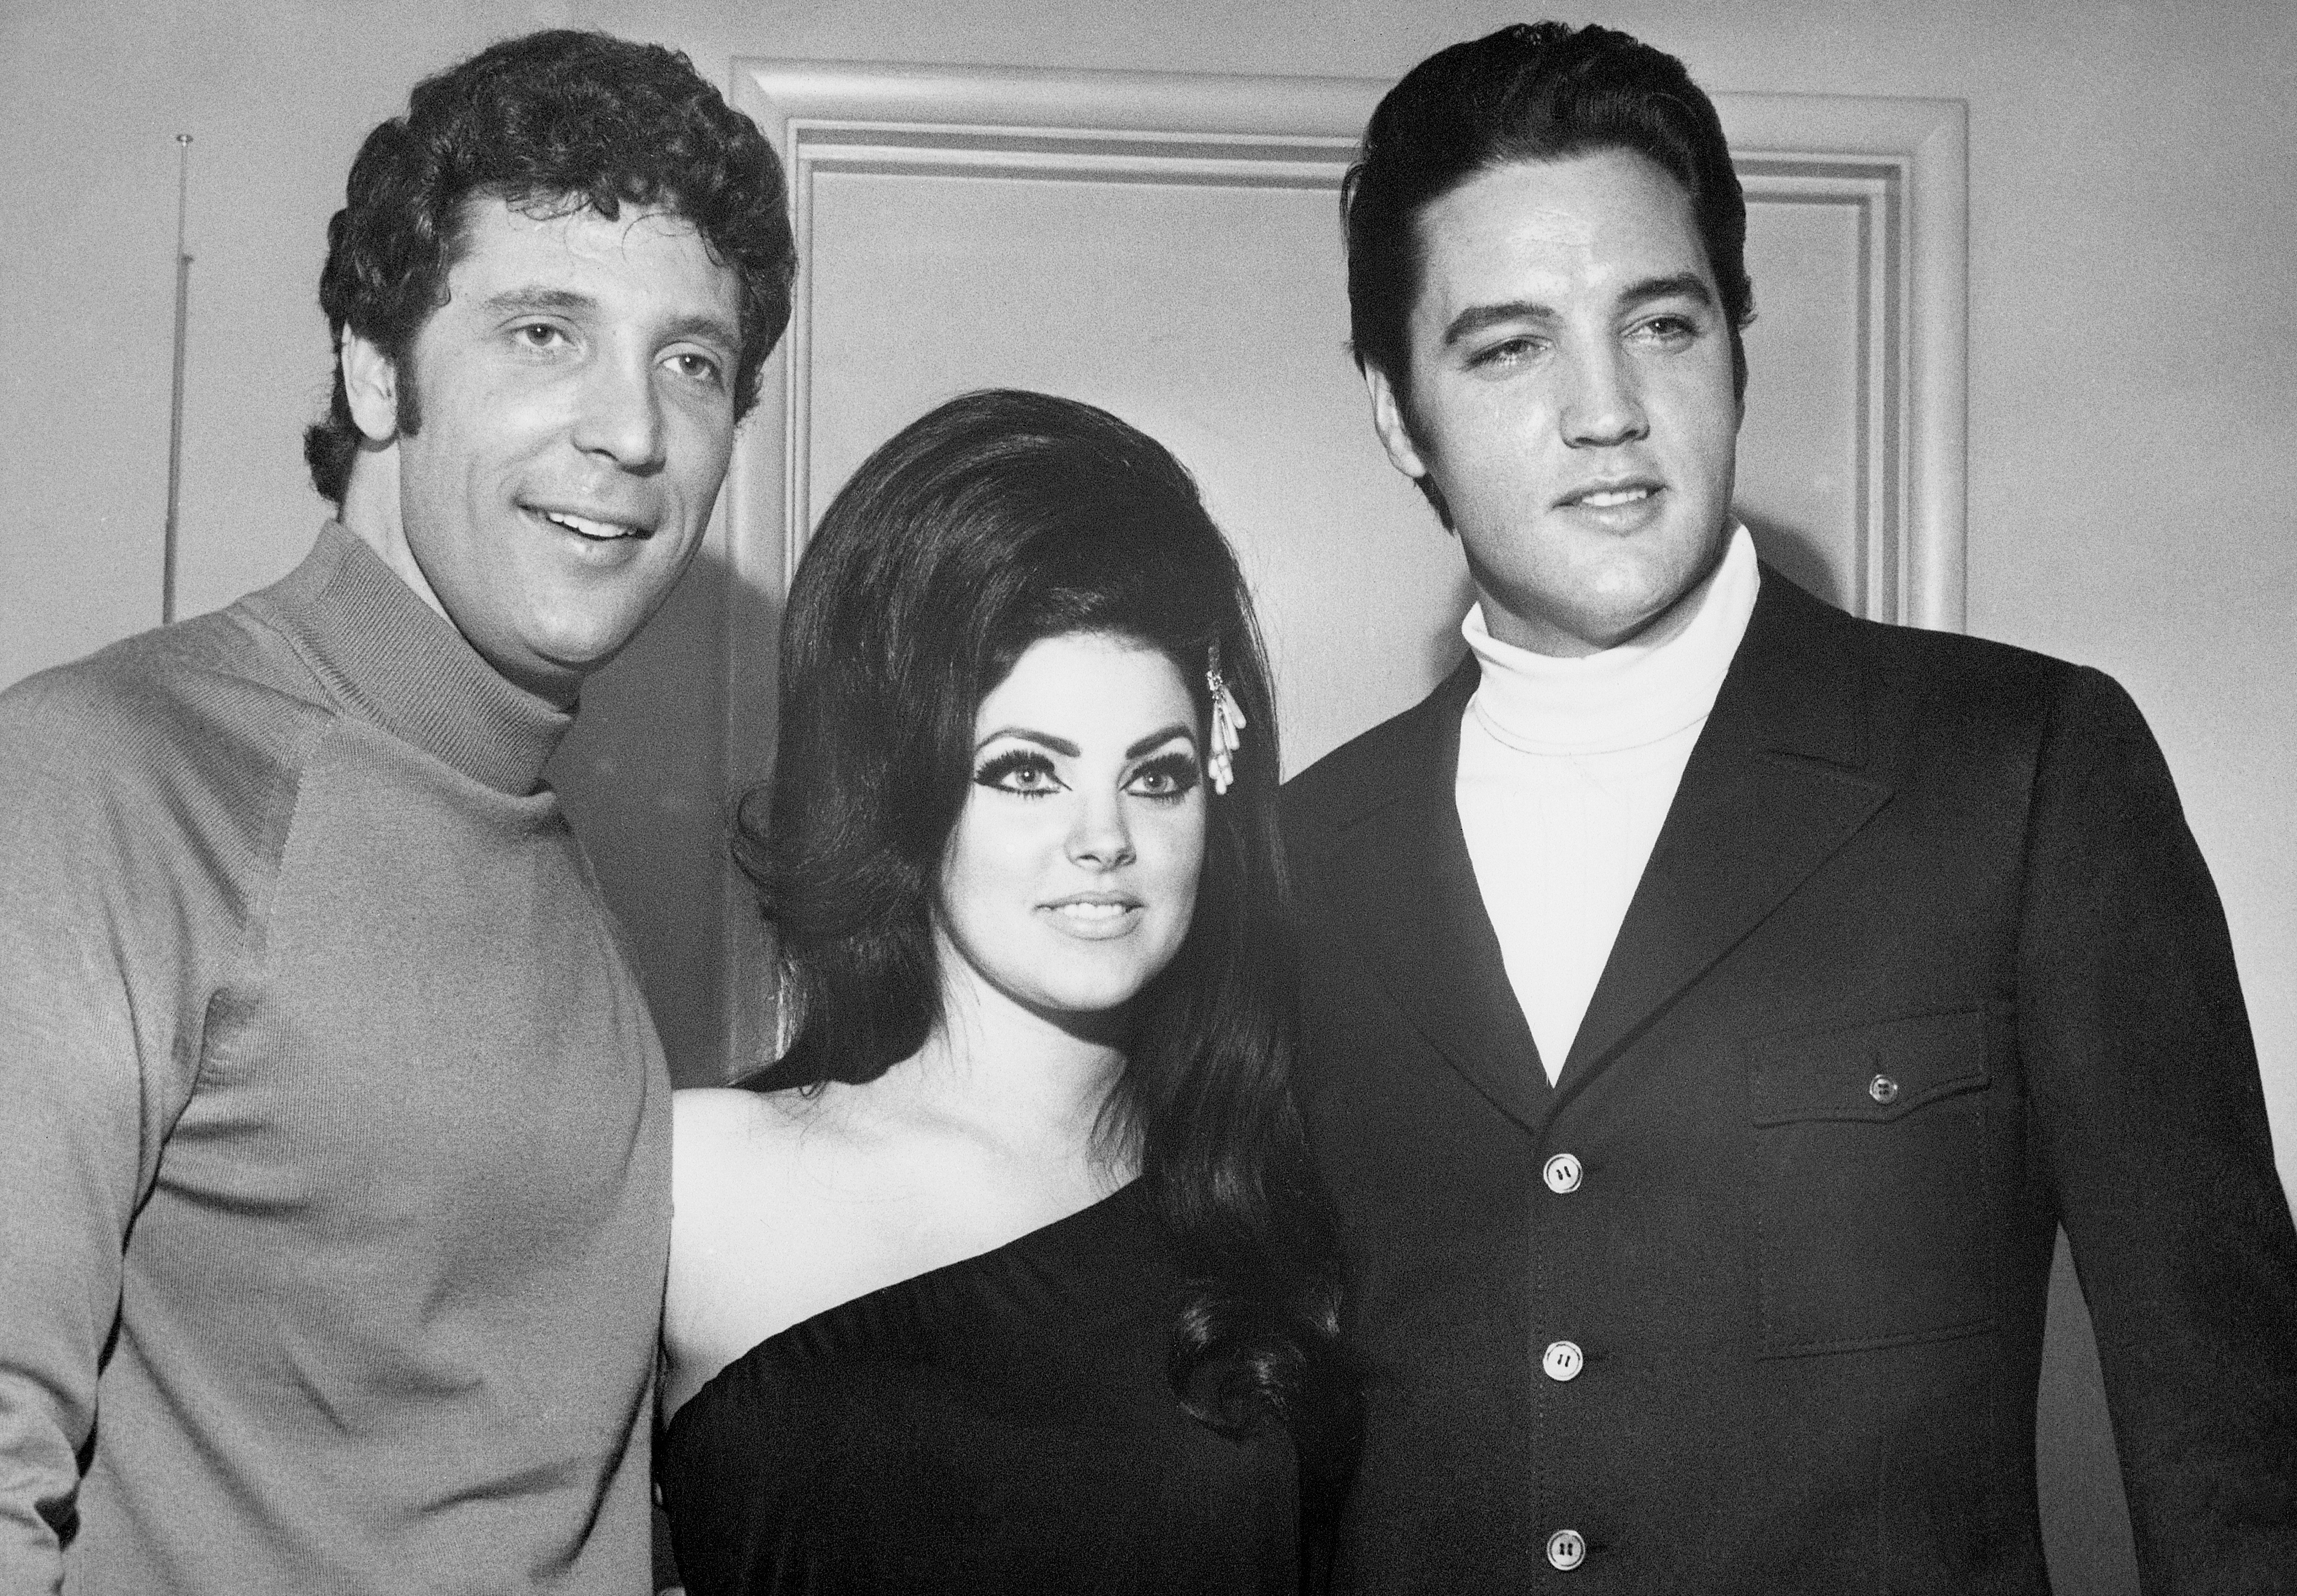 Tom Jones (left), Priscilla Presley (middle), and Elvis Presley's (right) in Las Vegas in 1968 | Source: Getty Images